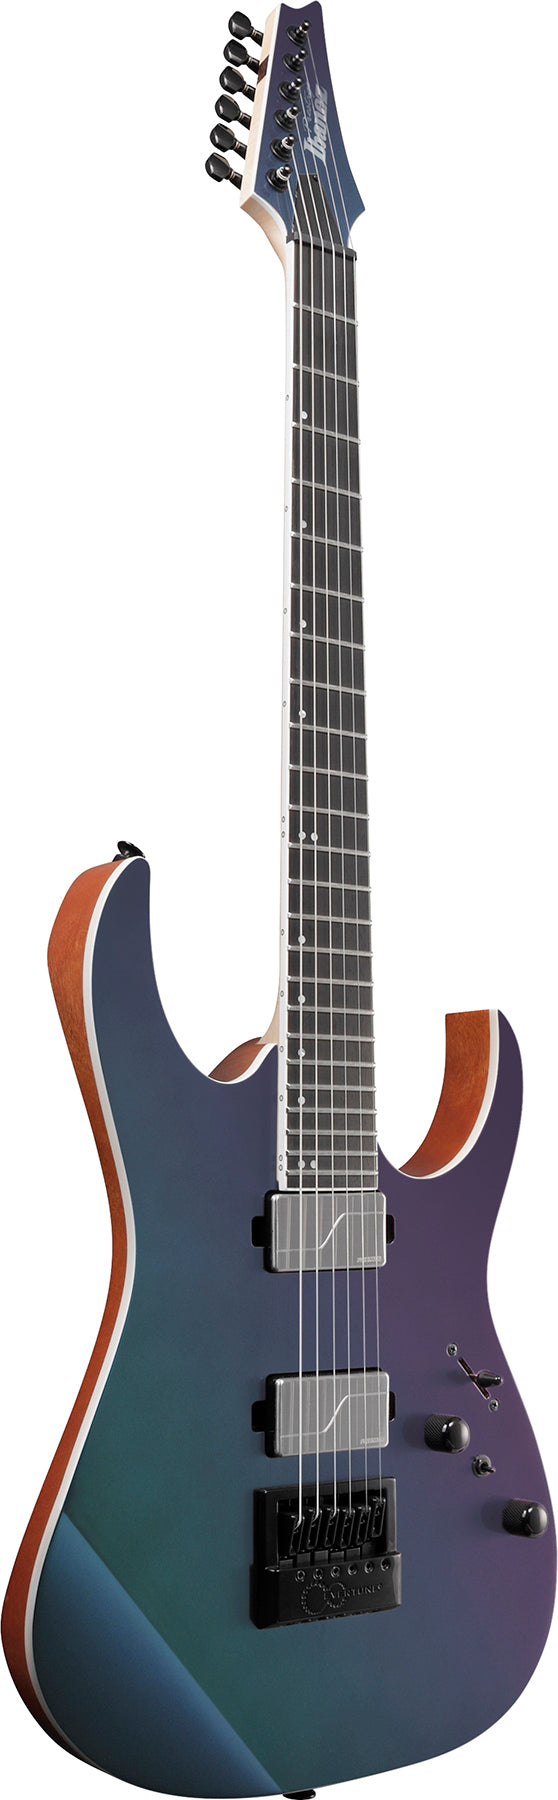 Ibanez RG5121ETPRT Electric Guitar (Polar Lights)